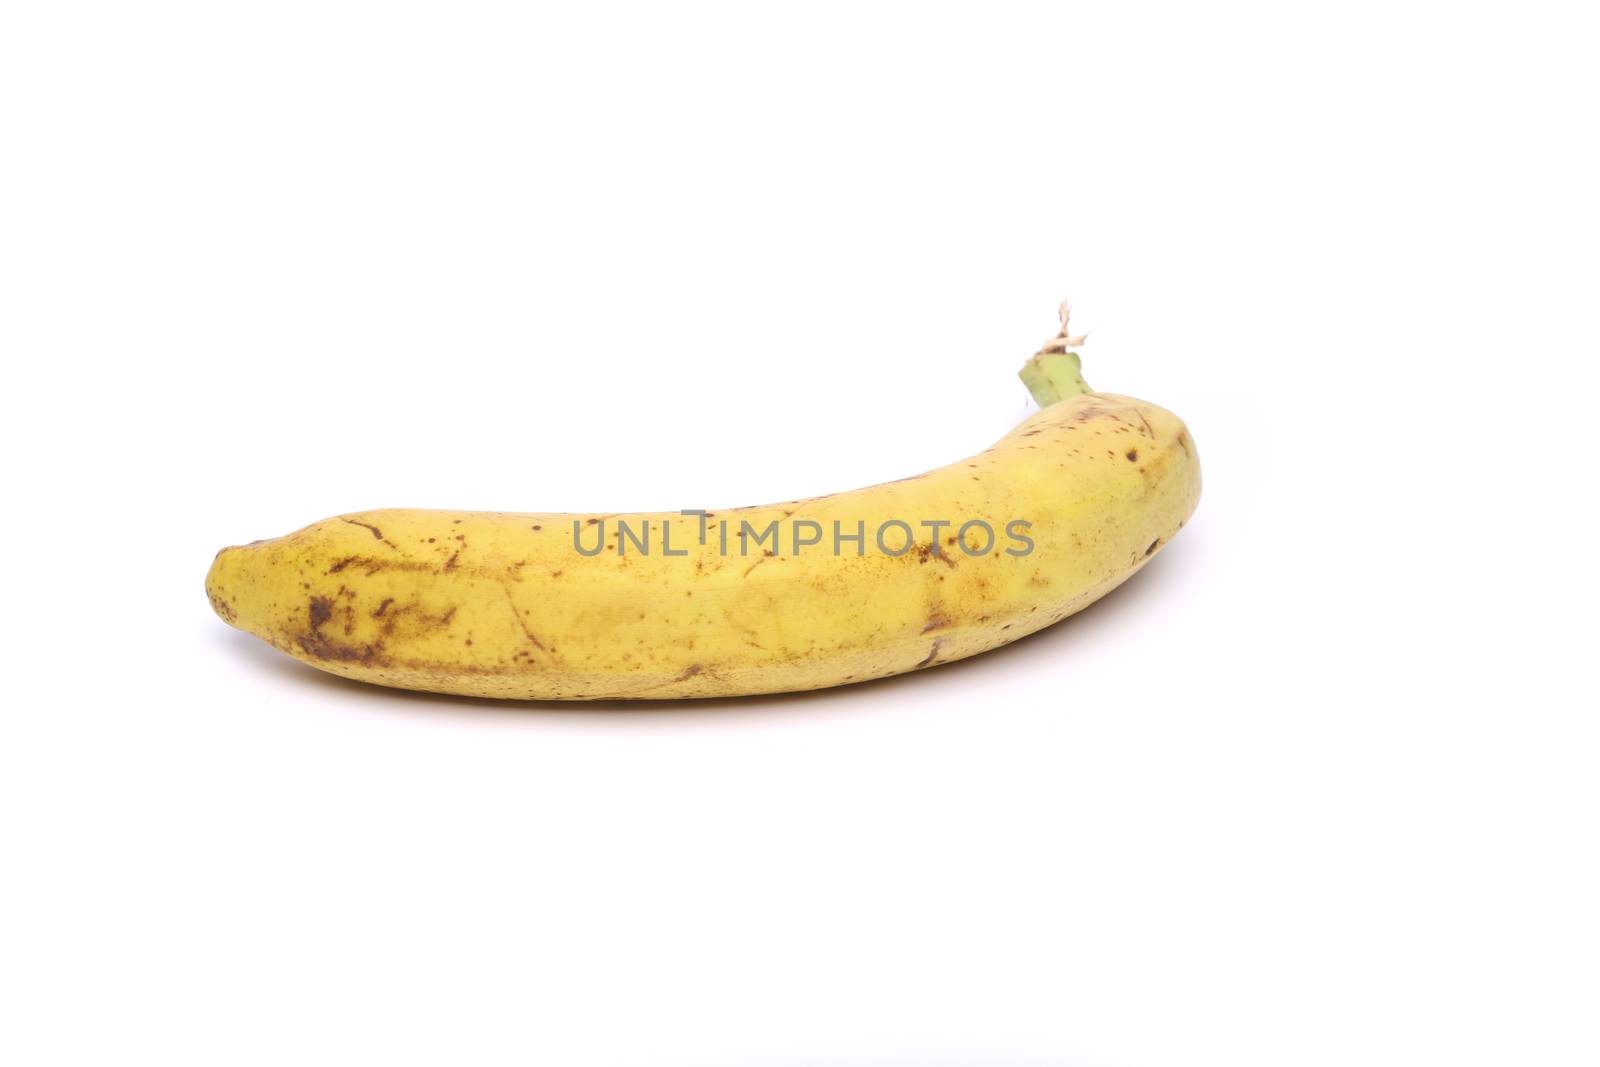 not so fresh banana